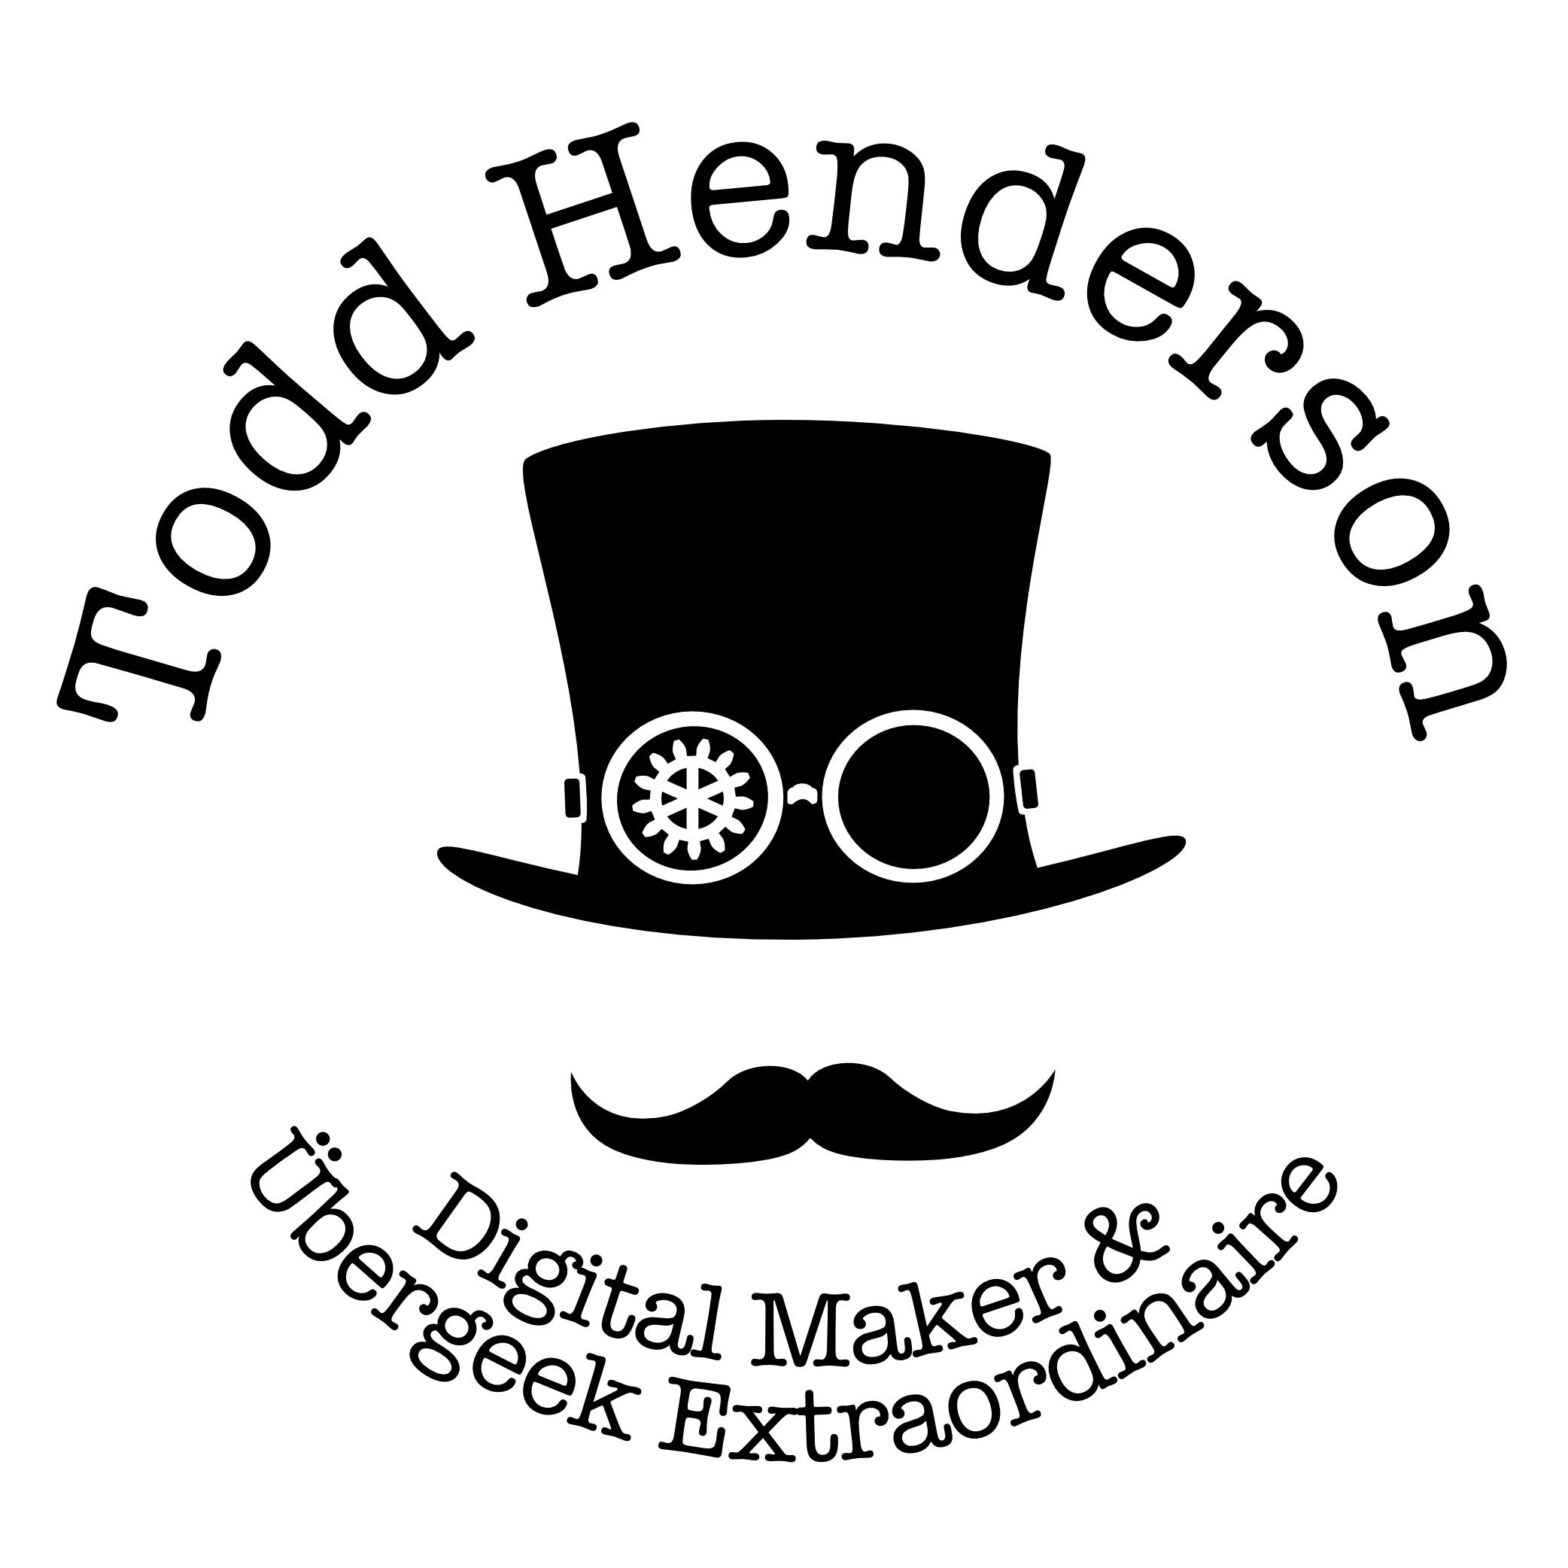 Todd Henderson Digital Maker and Ubergeek